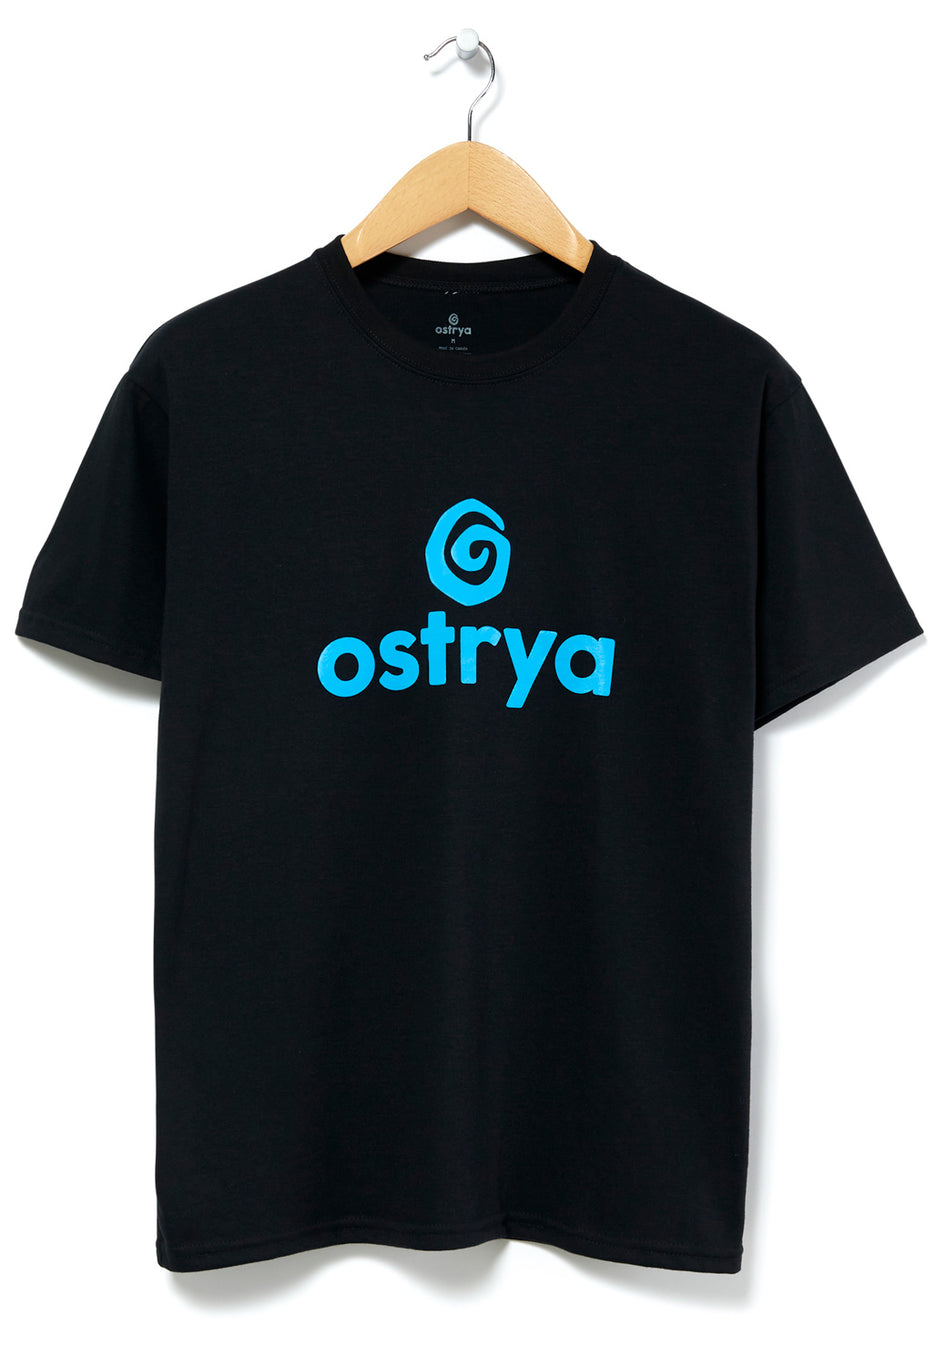 Ostrya Emblem Men's Organic T-Shirt 0